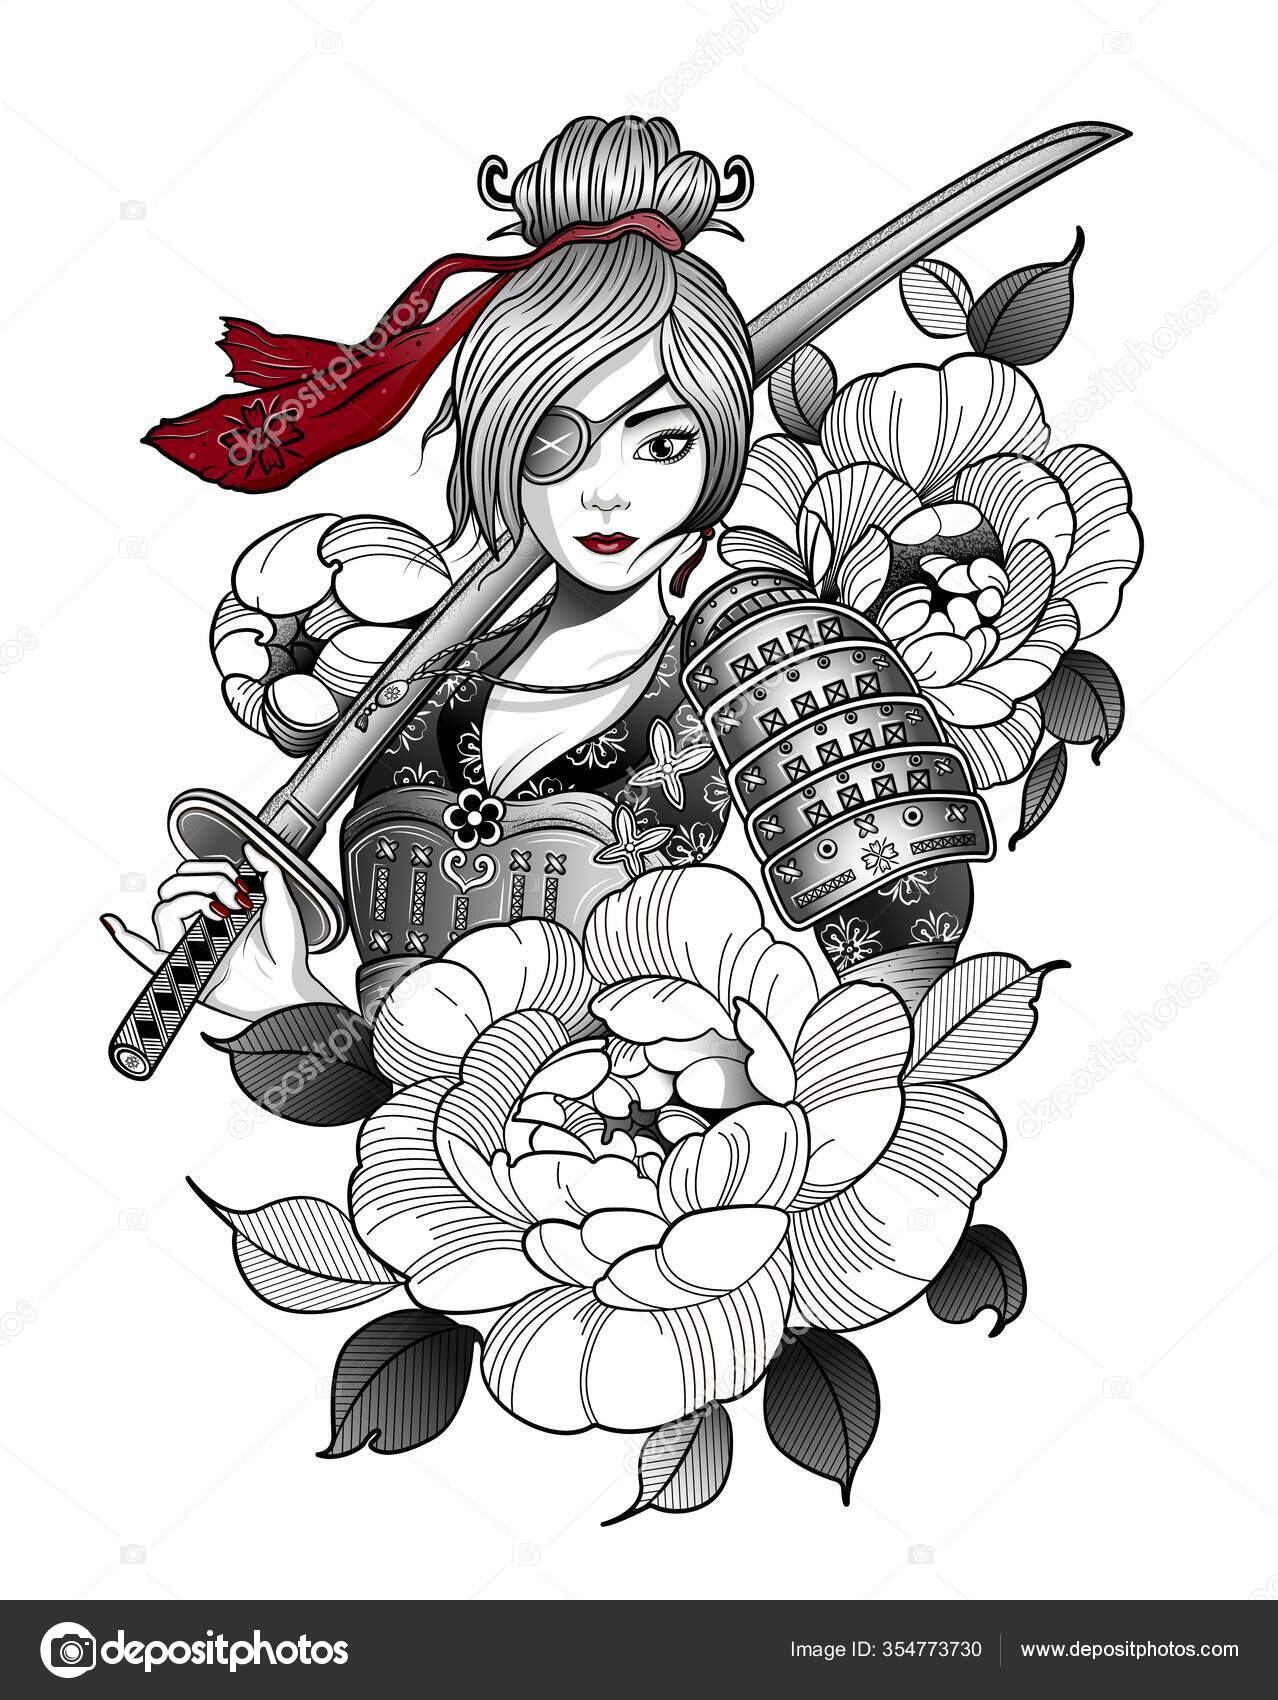 Female Samurai with Hannya mask – Chronic Ink